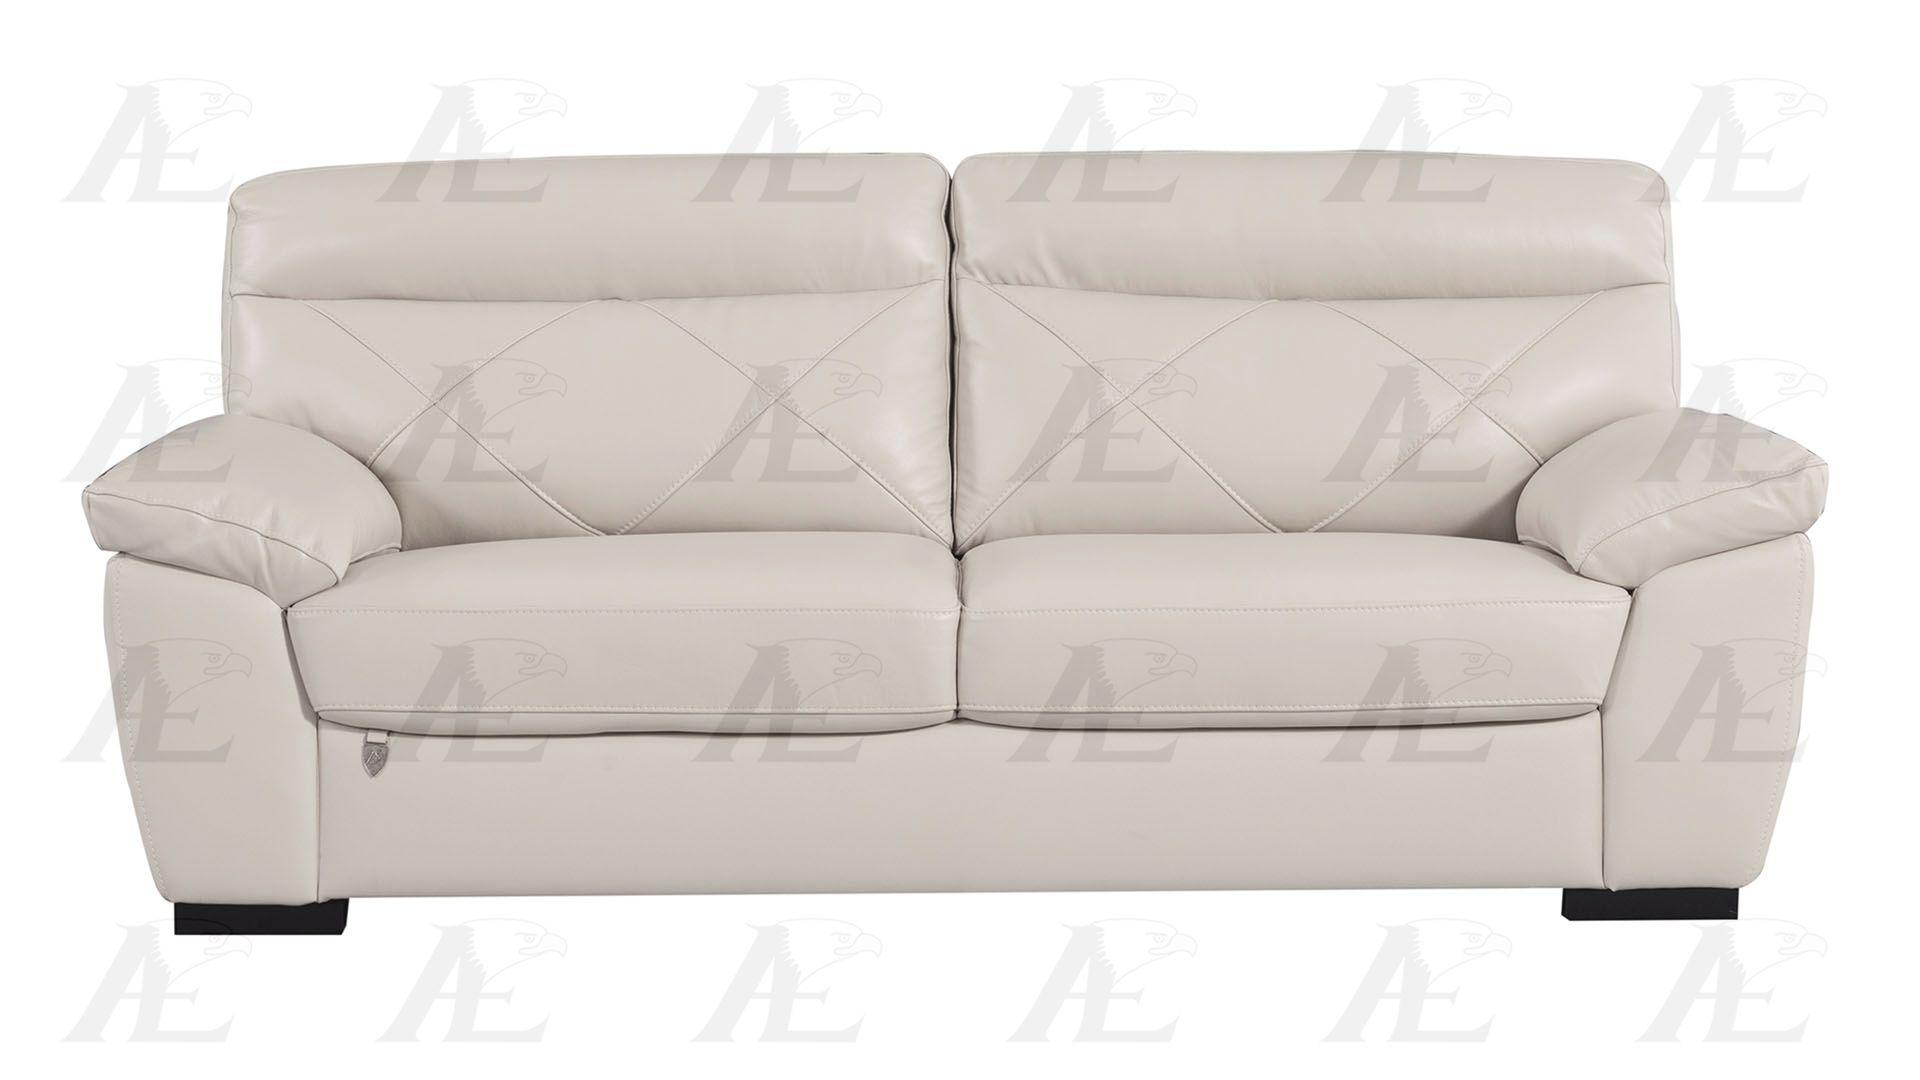 

    
EK081-LG-Set-2 American Eagle Furniture Sofa Set
